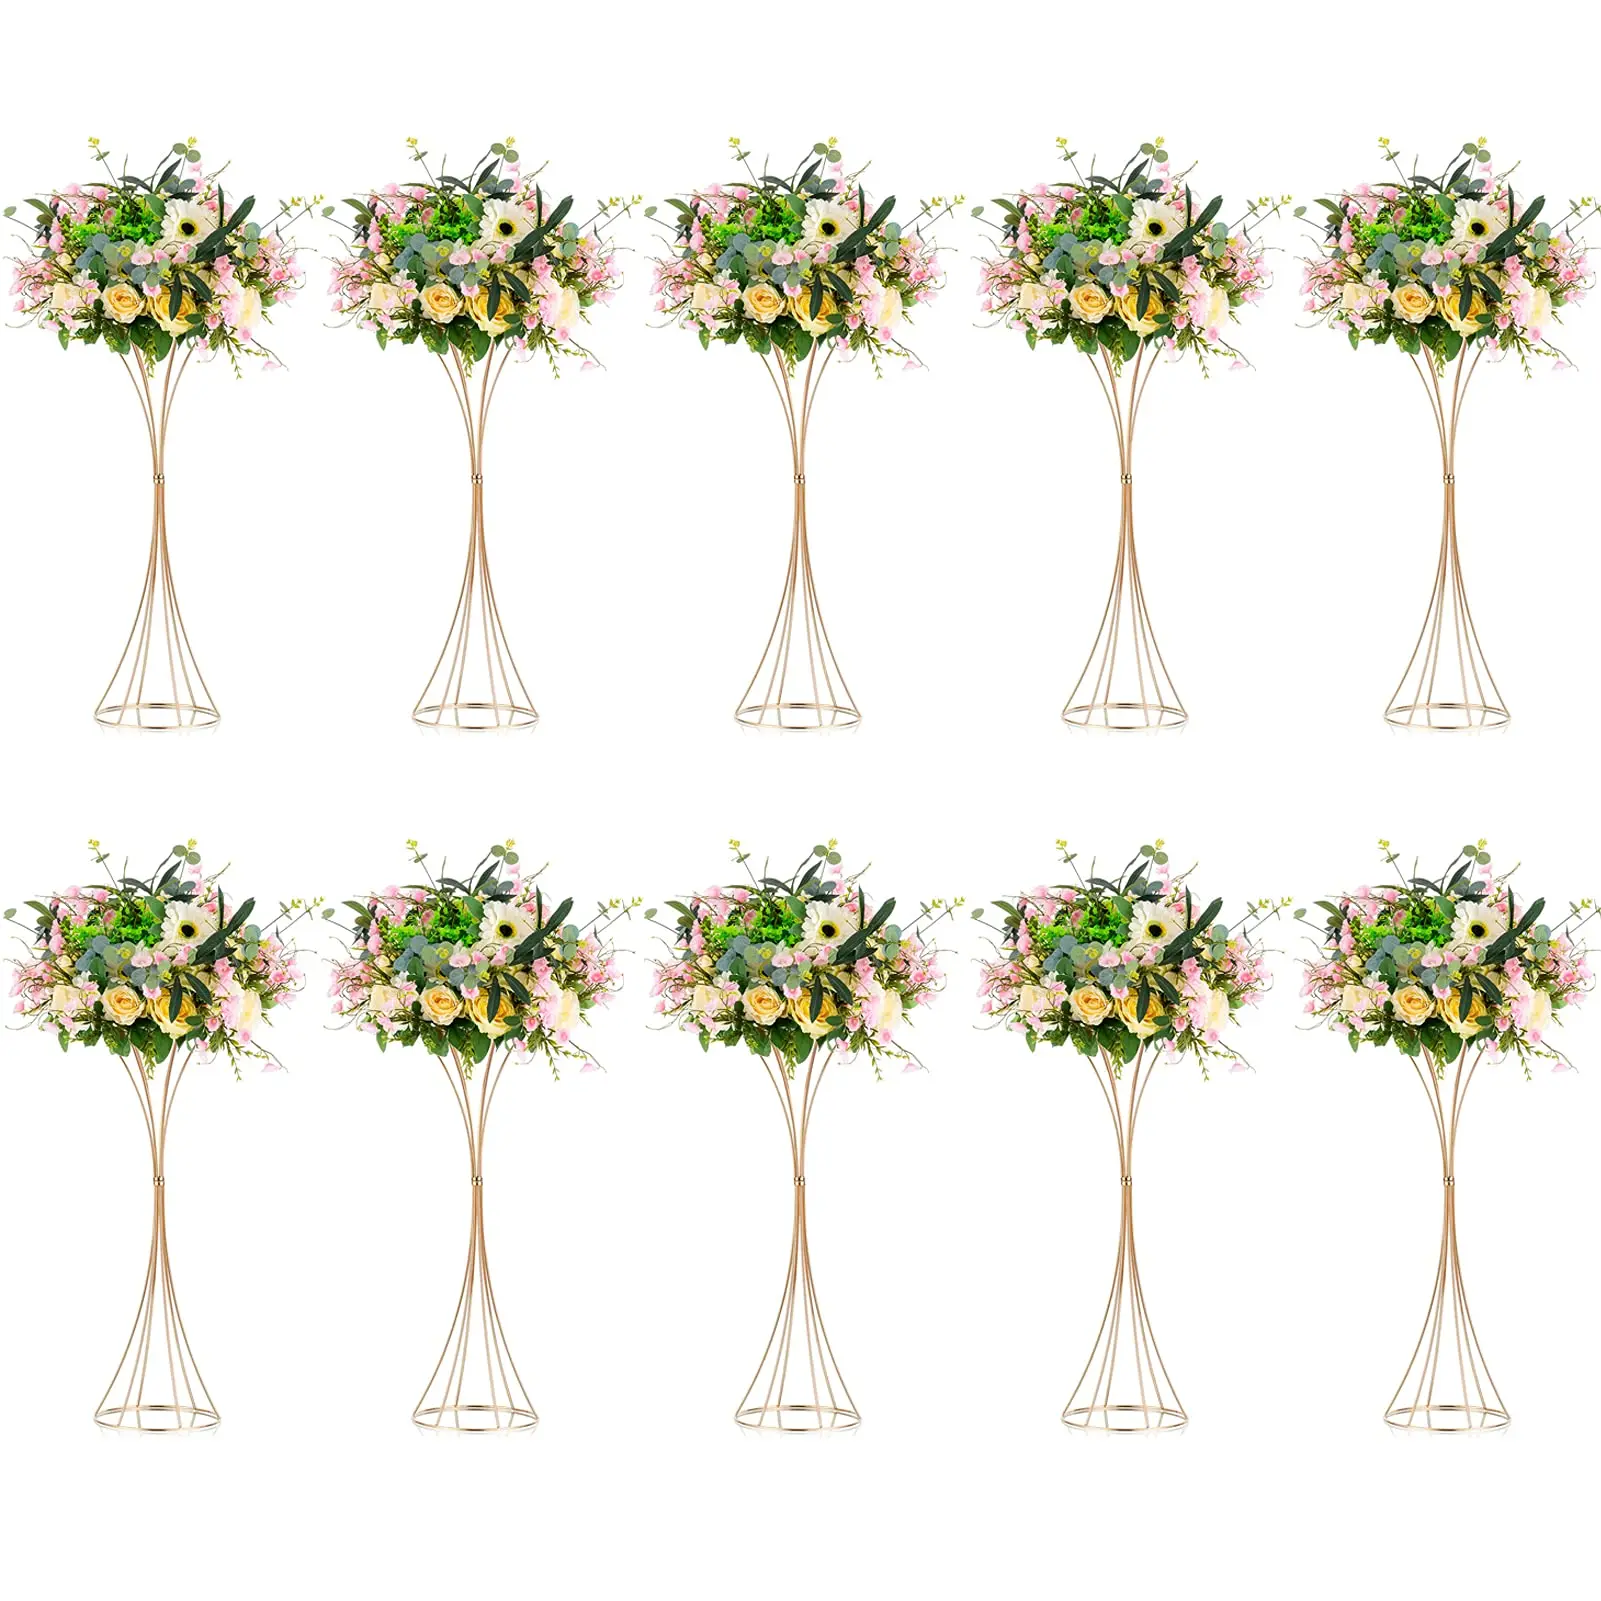 

10 Pcs Metal Flower Trumpet Vase 80cm Tall Gold Vase, Wedding Centerpieces for Tables, Artificial Arrangement Flower Stand for